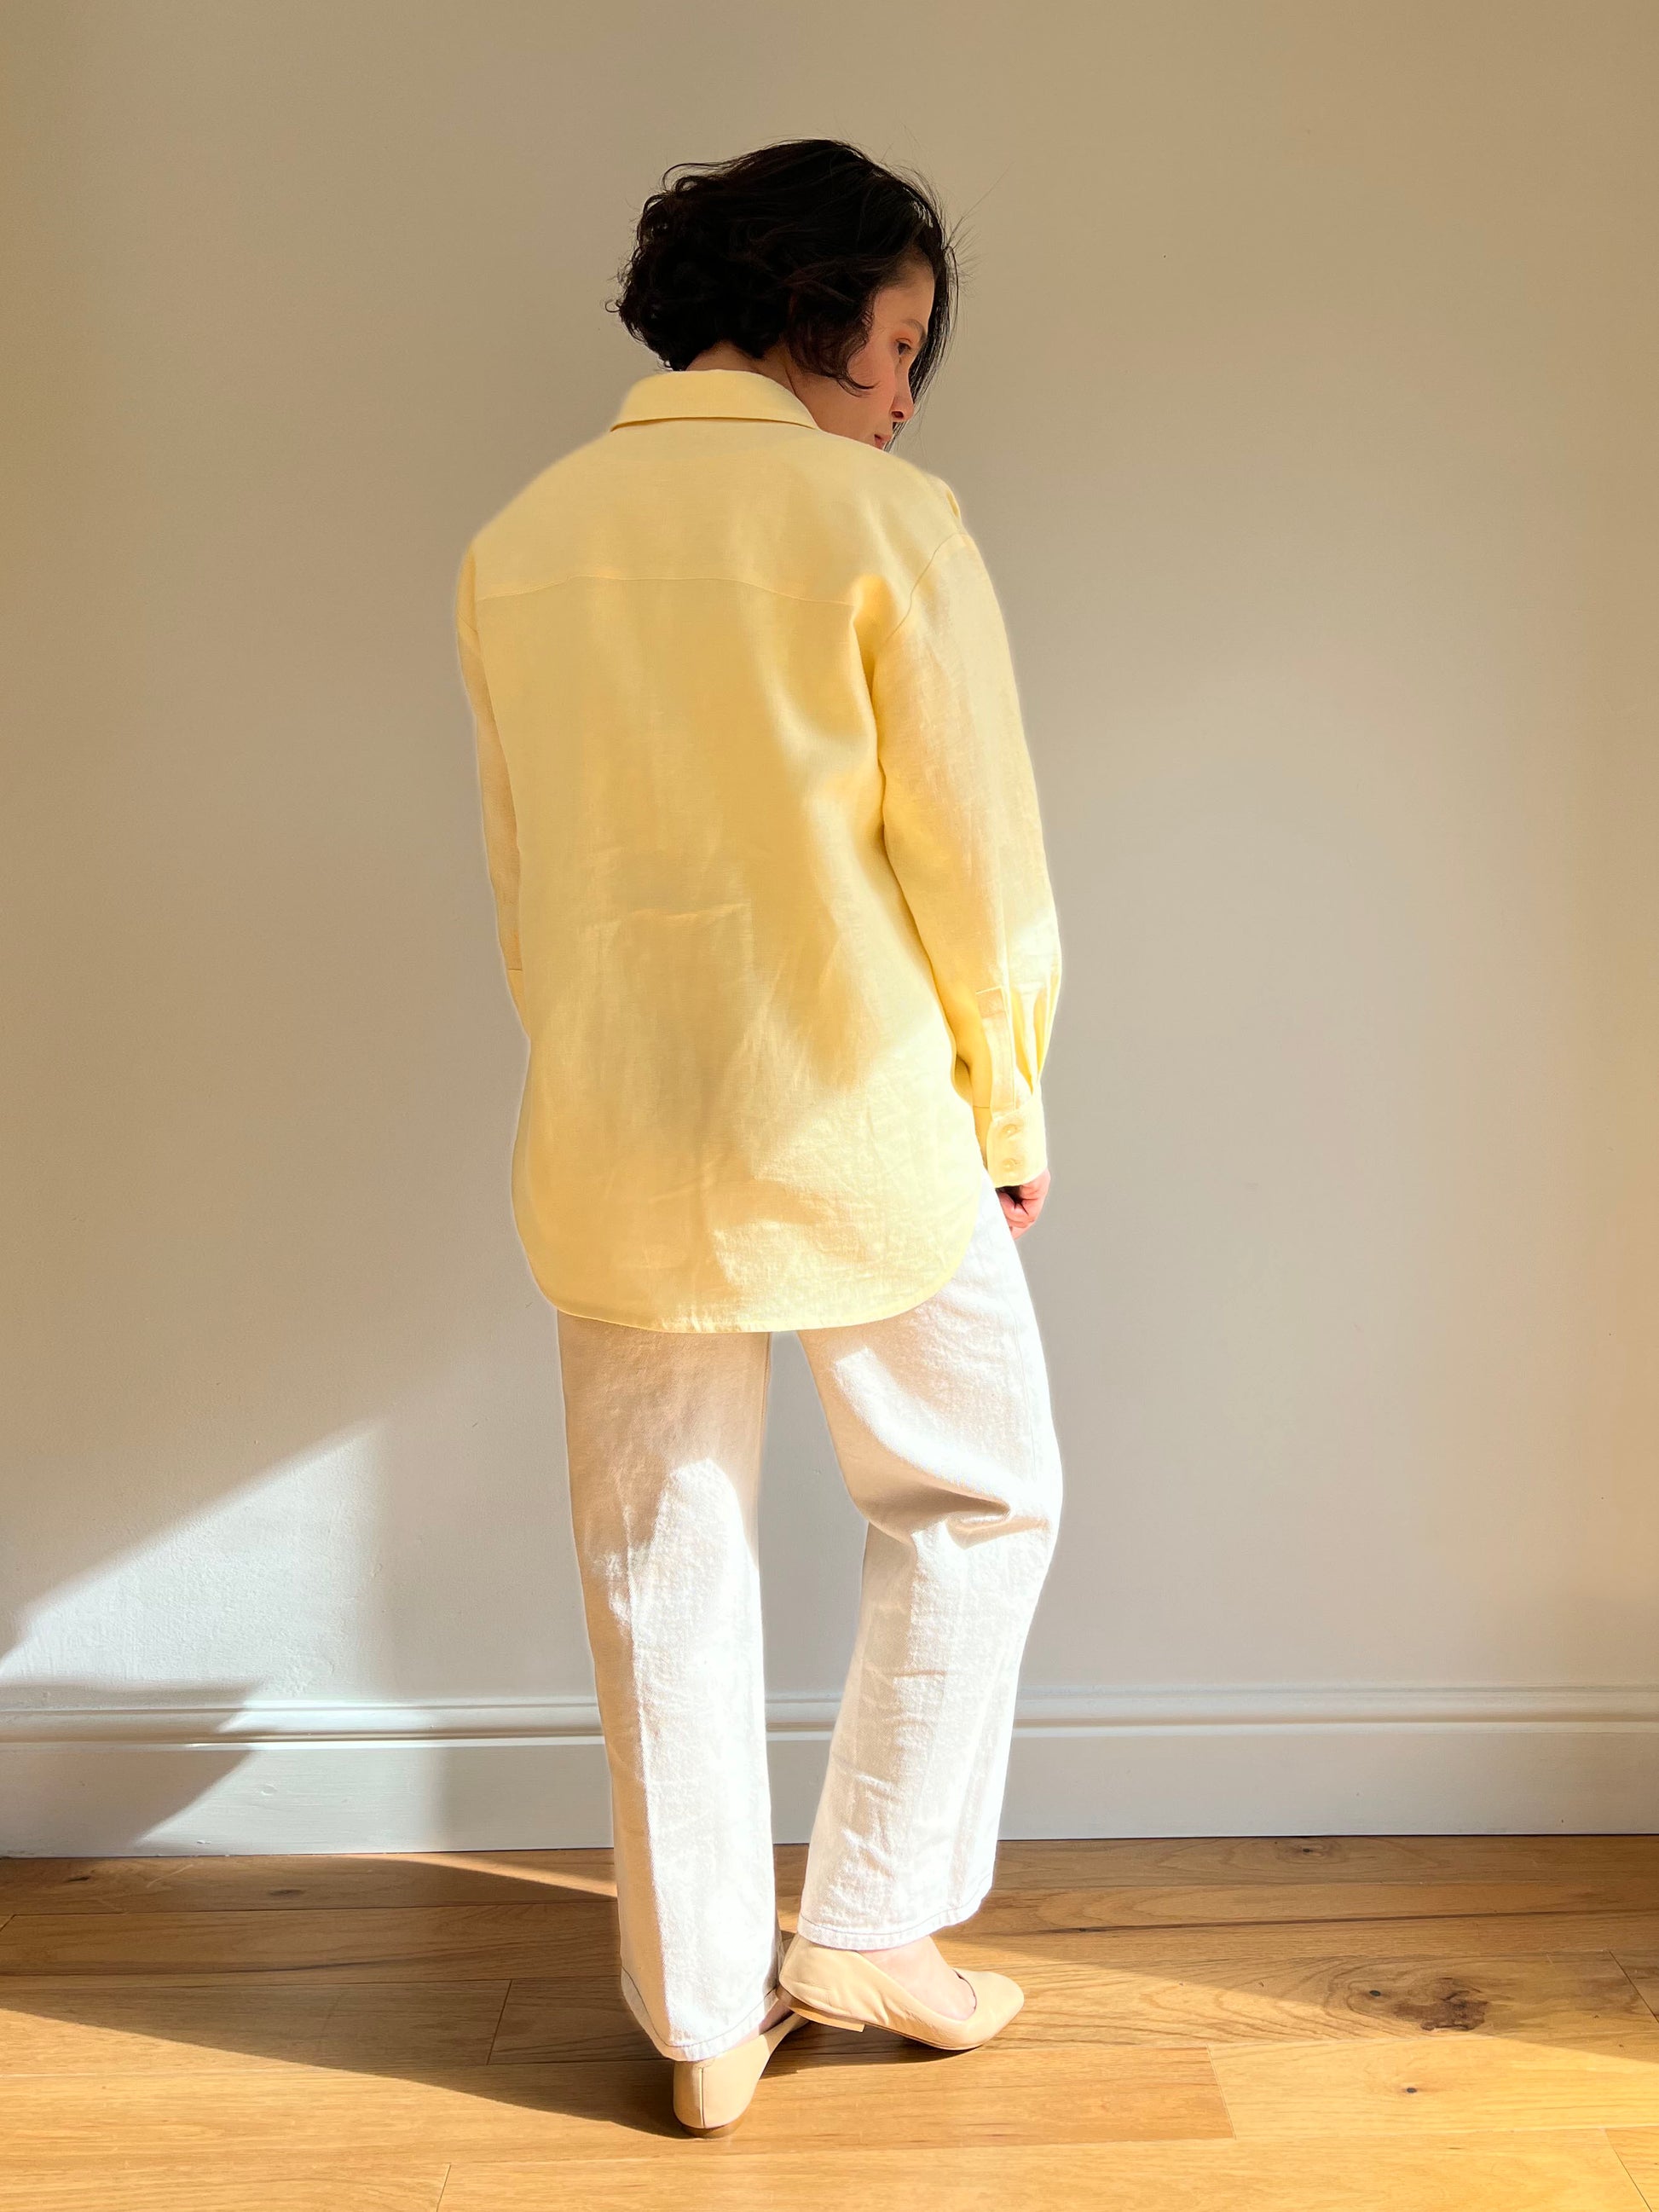 LEO SHIRT – PDF SEWING PATTERN - Bella loves patterns